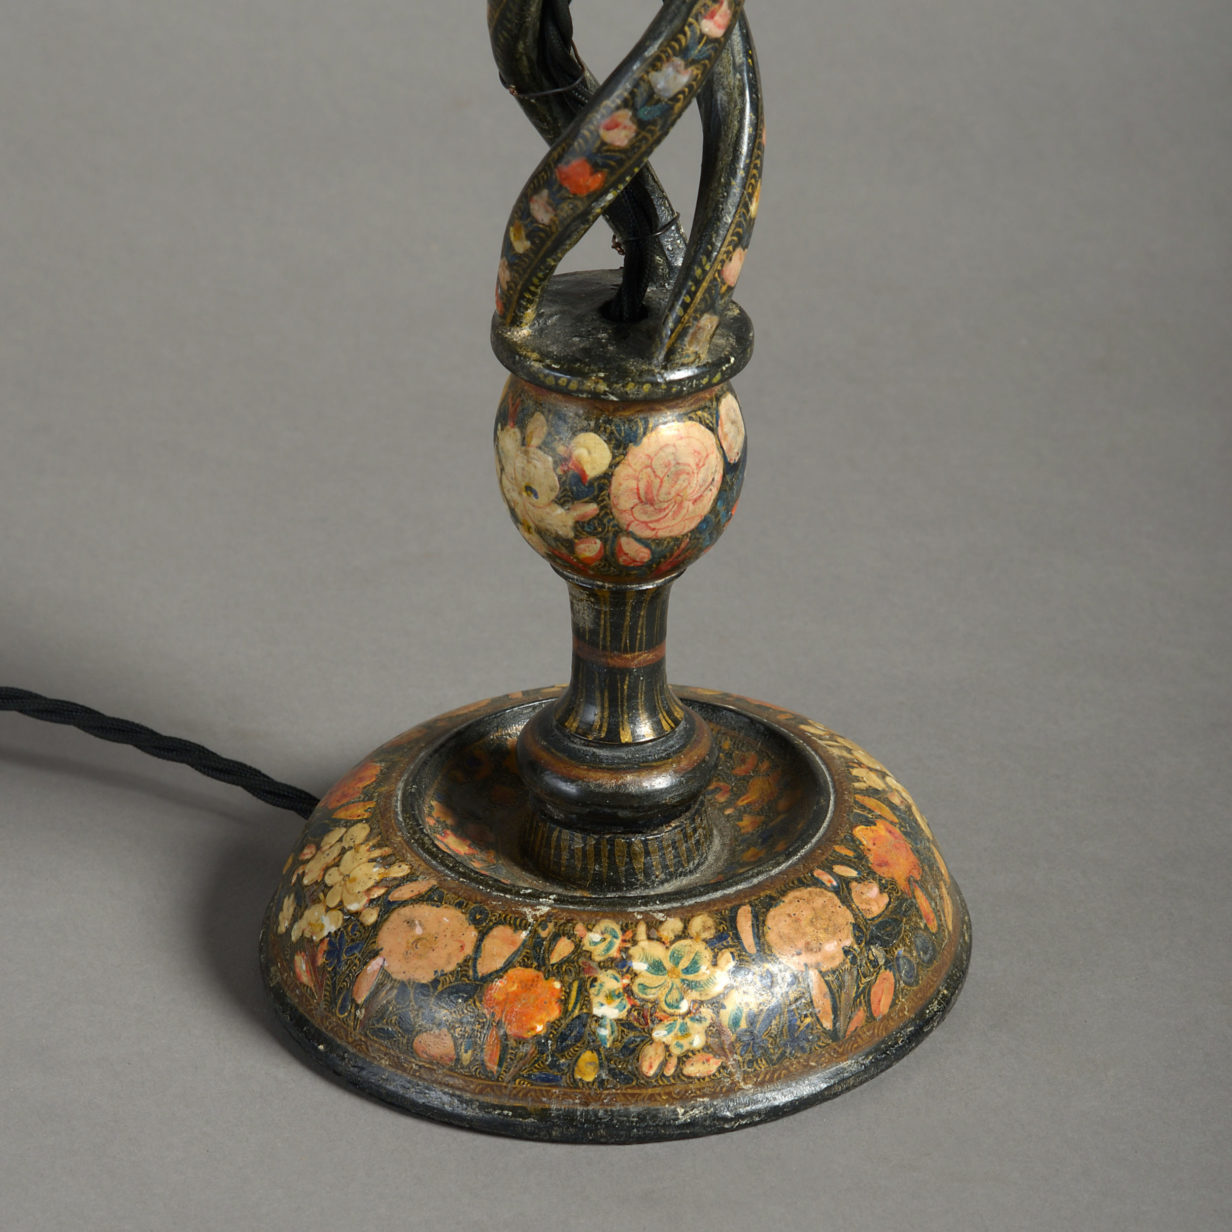 An early 20th century kashmiri table lamp